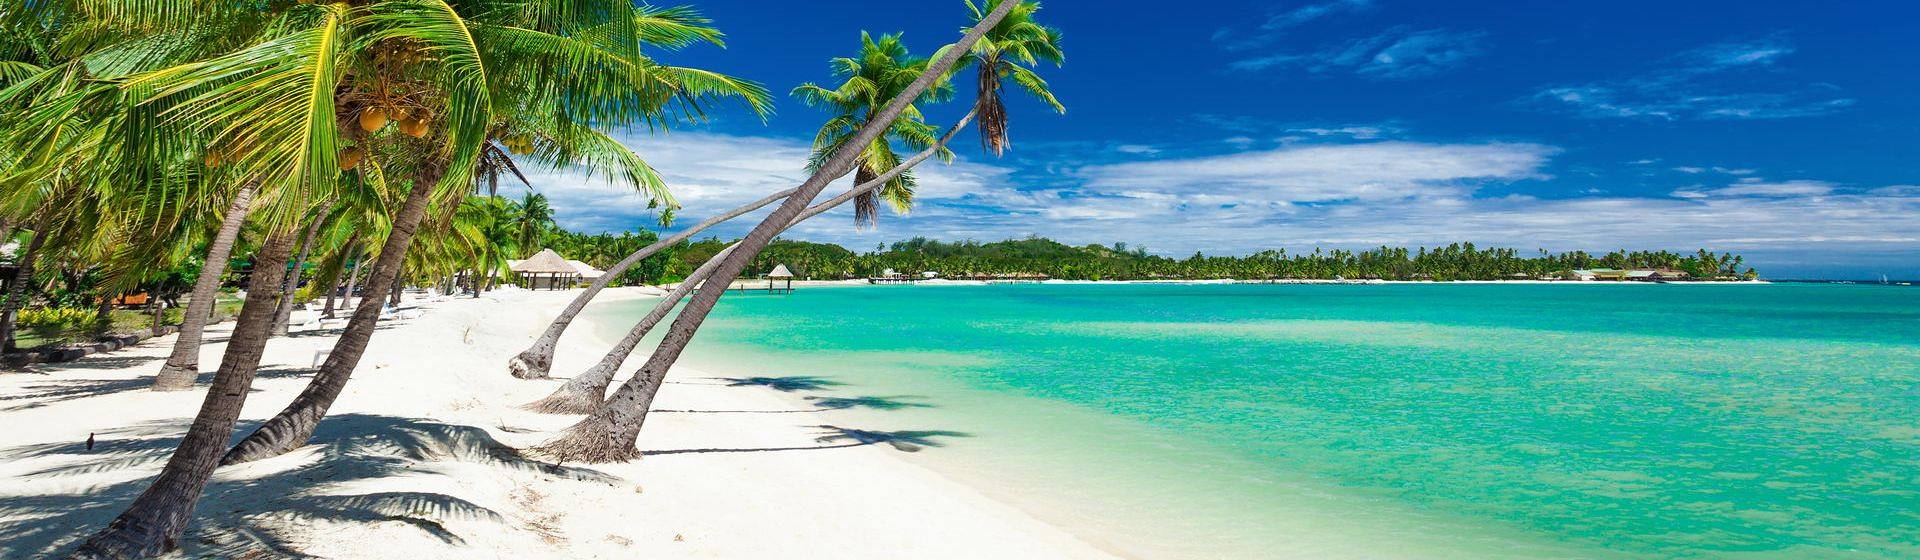 Holidays to Fiji Image